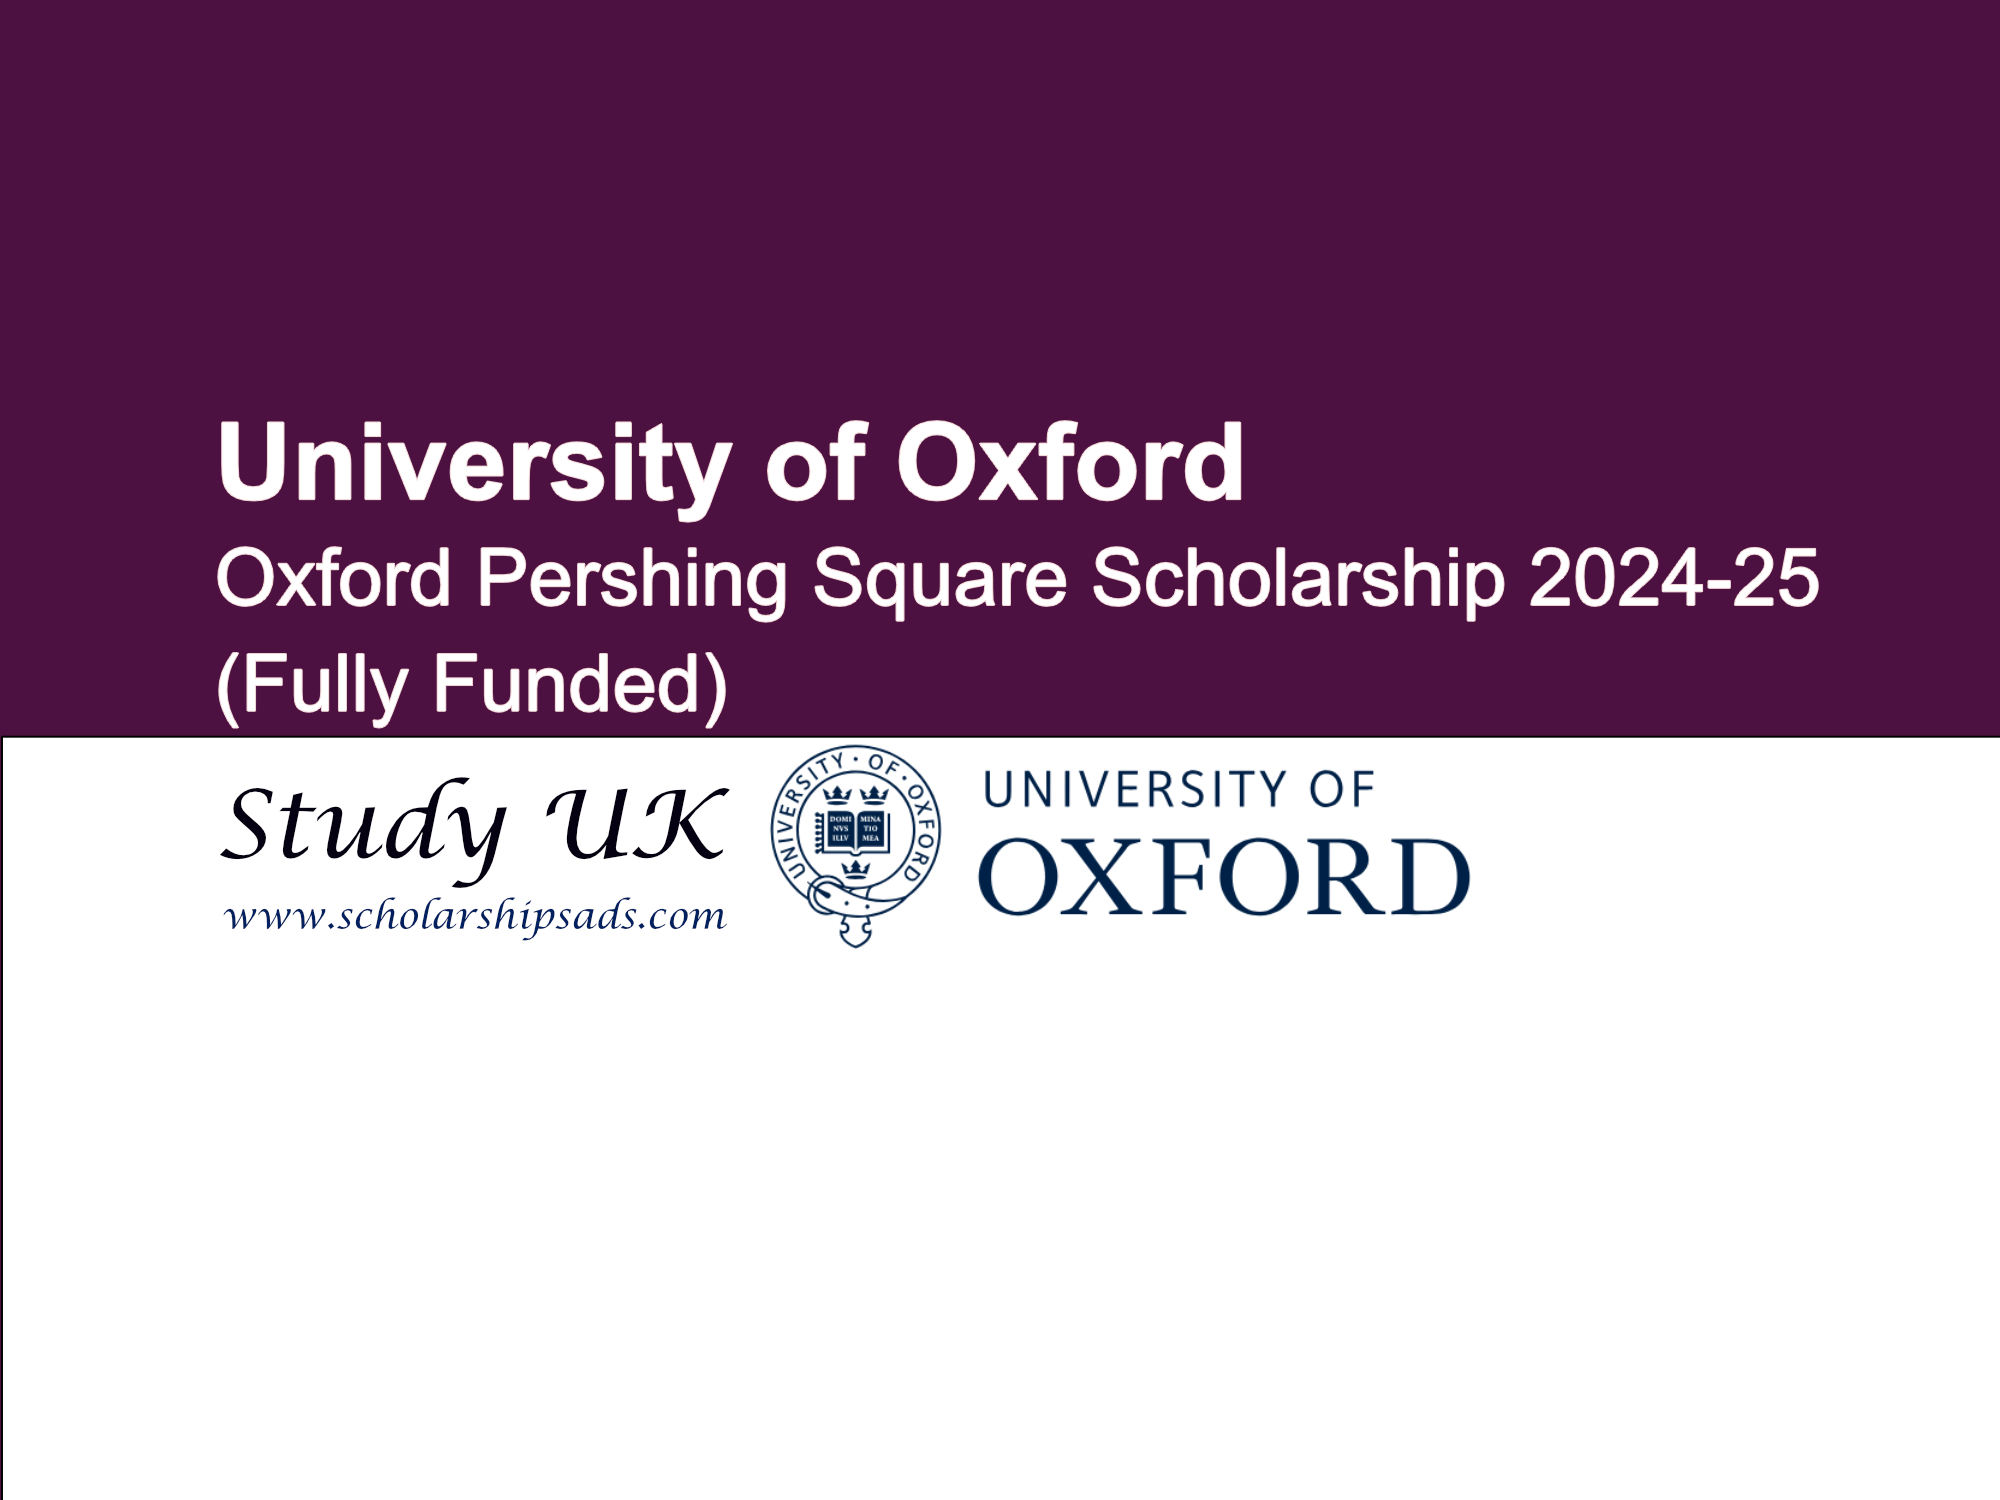  Oxford Pershing Square Scholarships. 